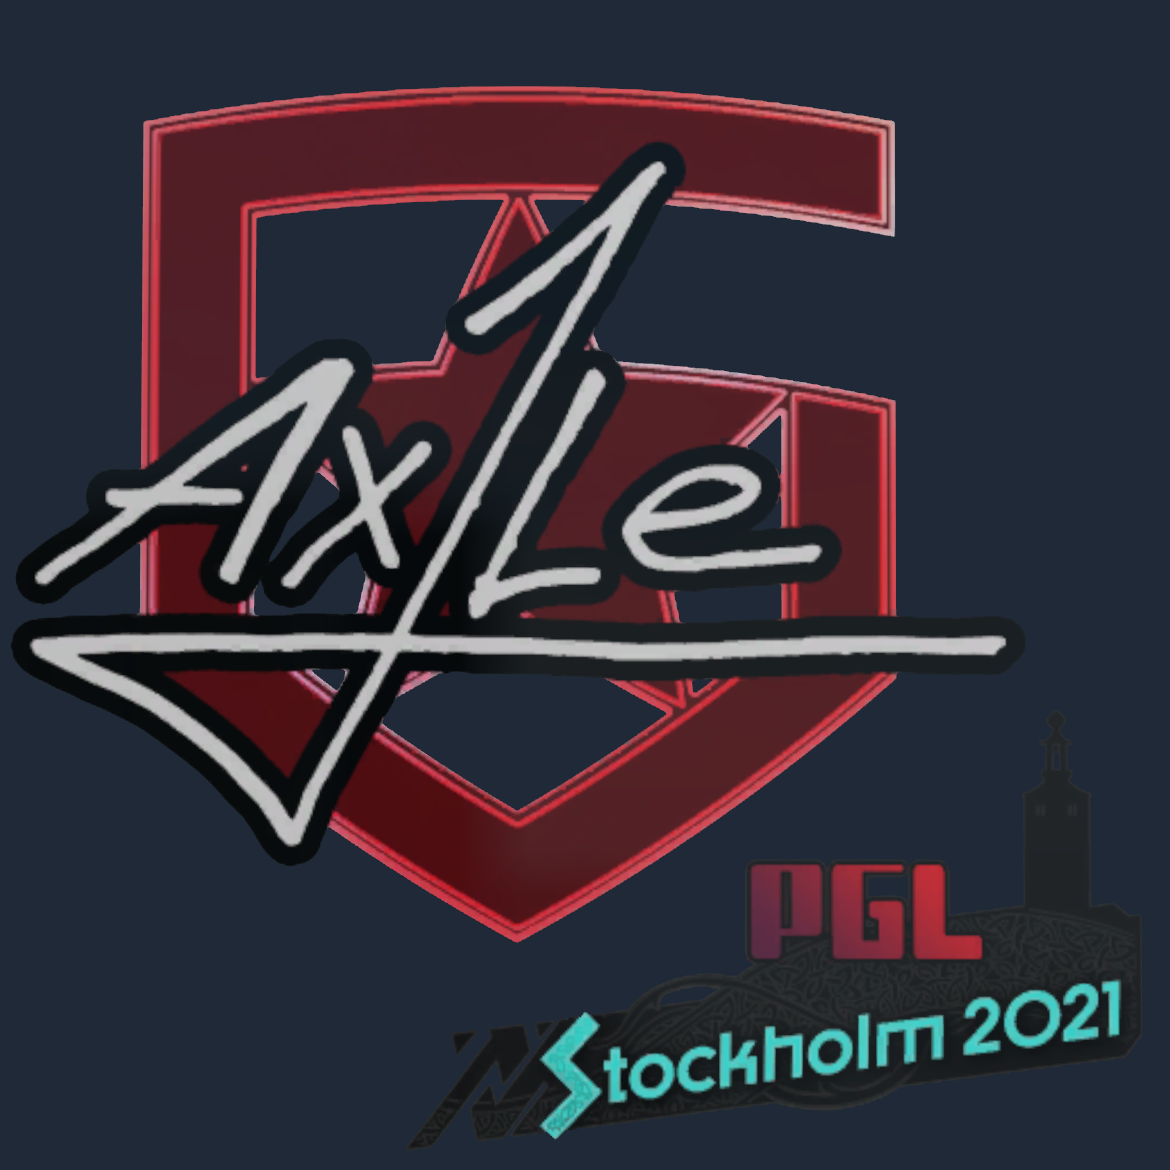 Sticker | Ax1Le | Stockholm 2021 Screenshot